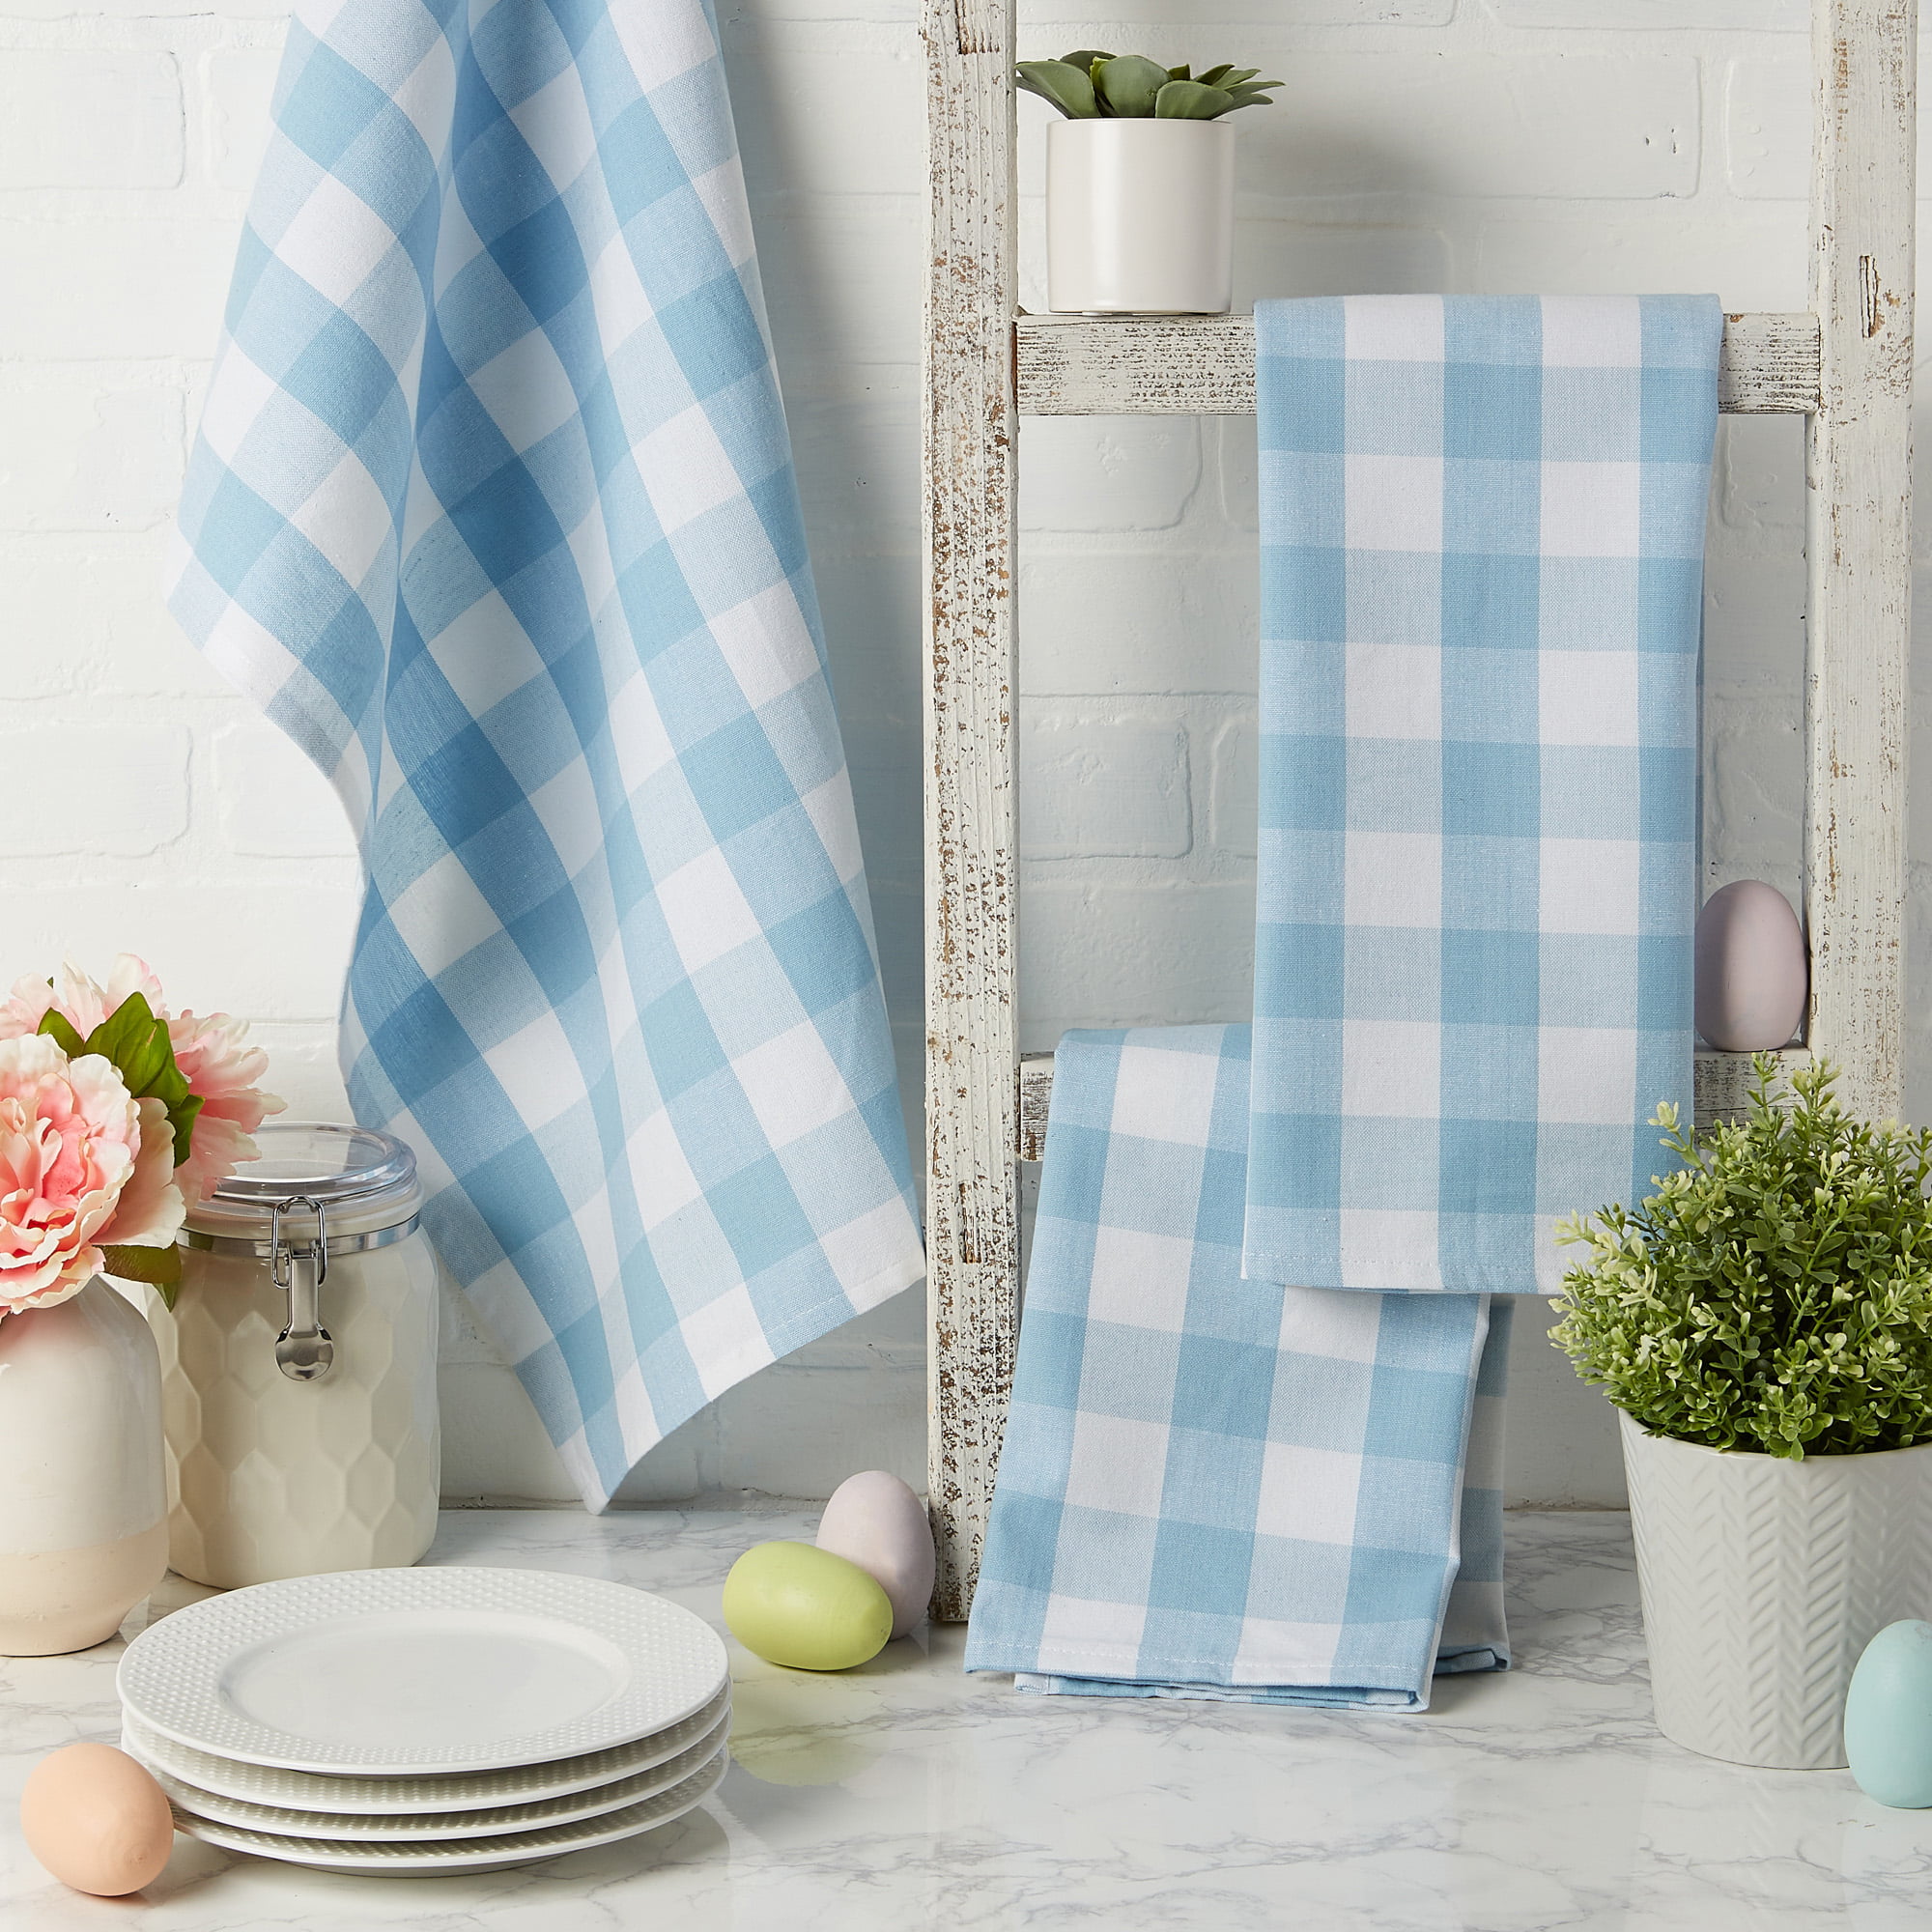 Large Kitchen Towels - Blue Mist, Set of 3